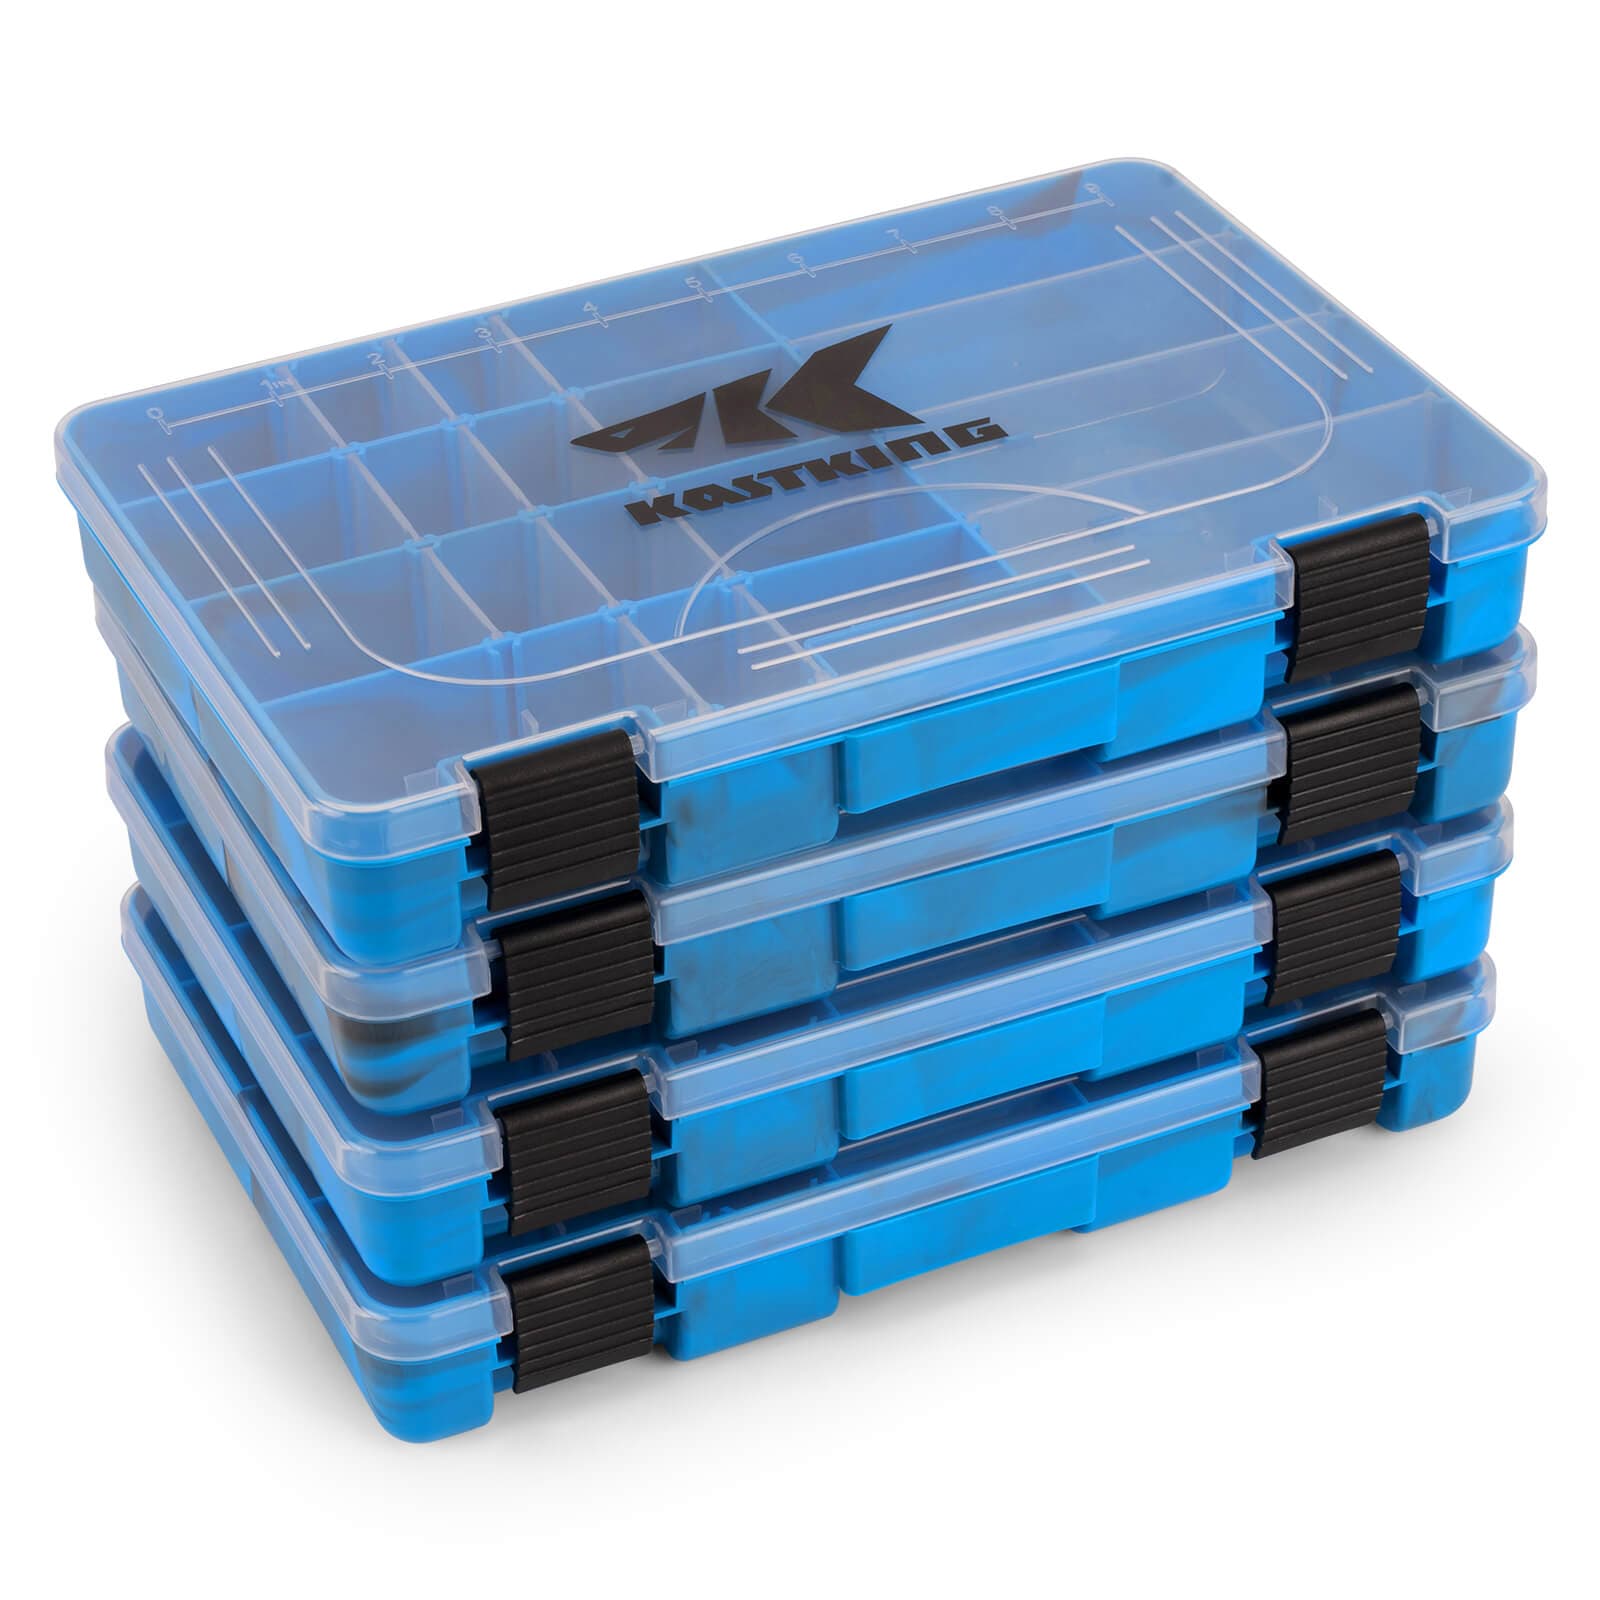 KastKing Tackle Box 2/4 Packs Utility Tray Plastic 3600 & 3700